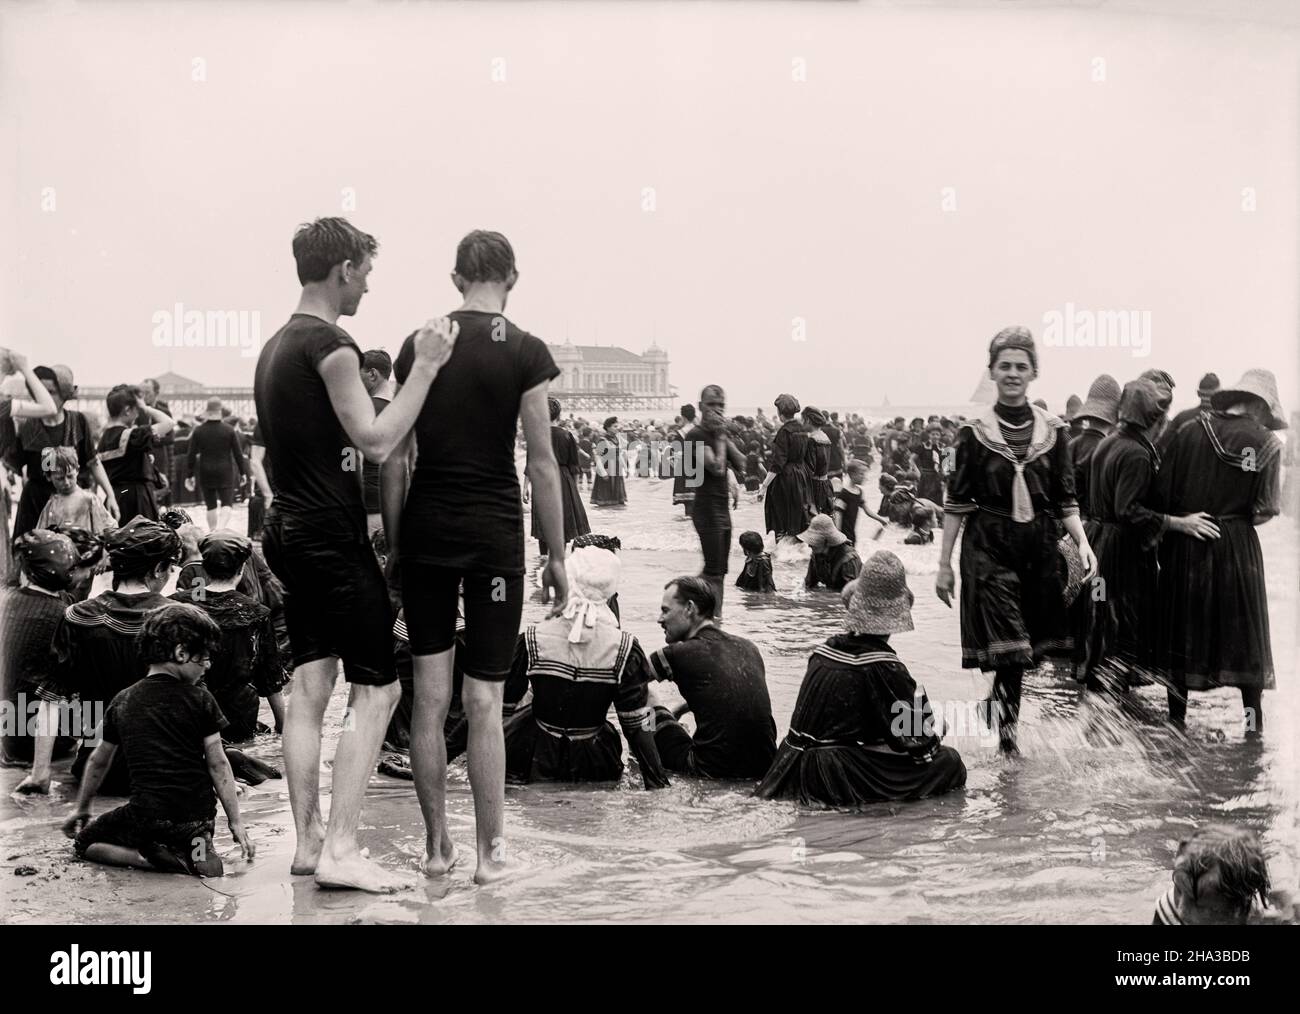 Crowdewd Beach - Atalntic City - 1900s - people on the beach Stock Photo